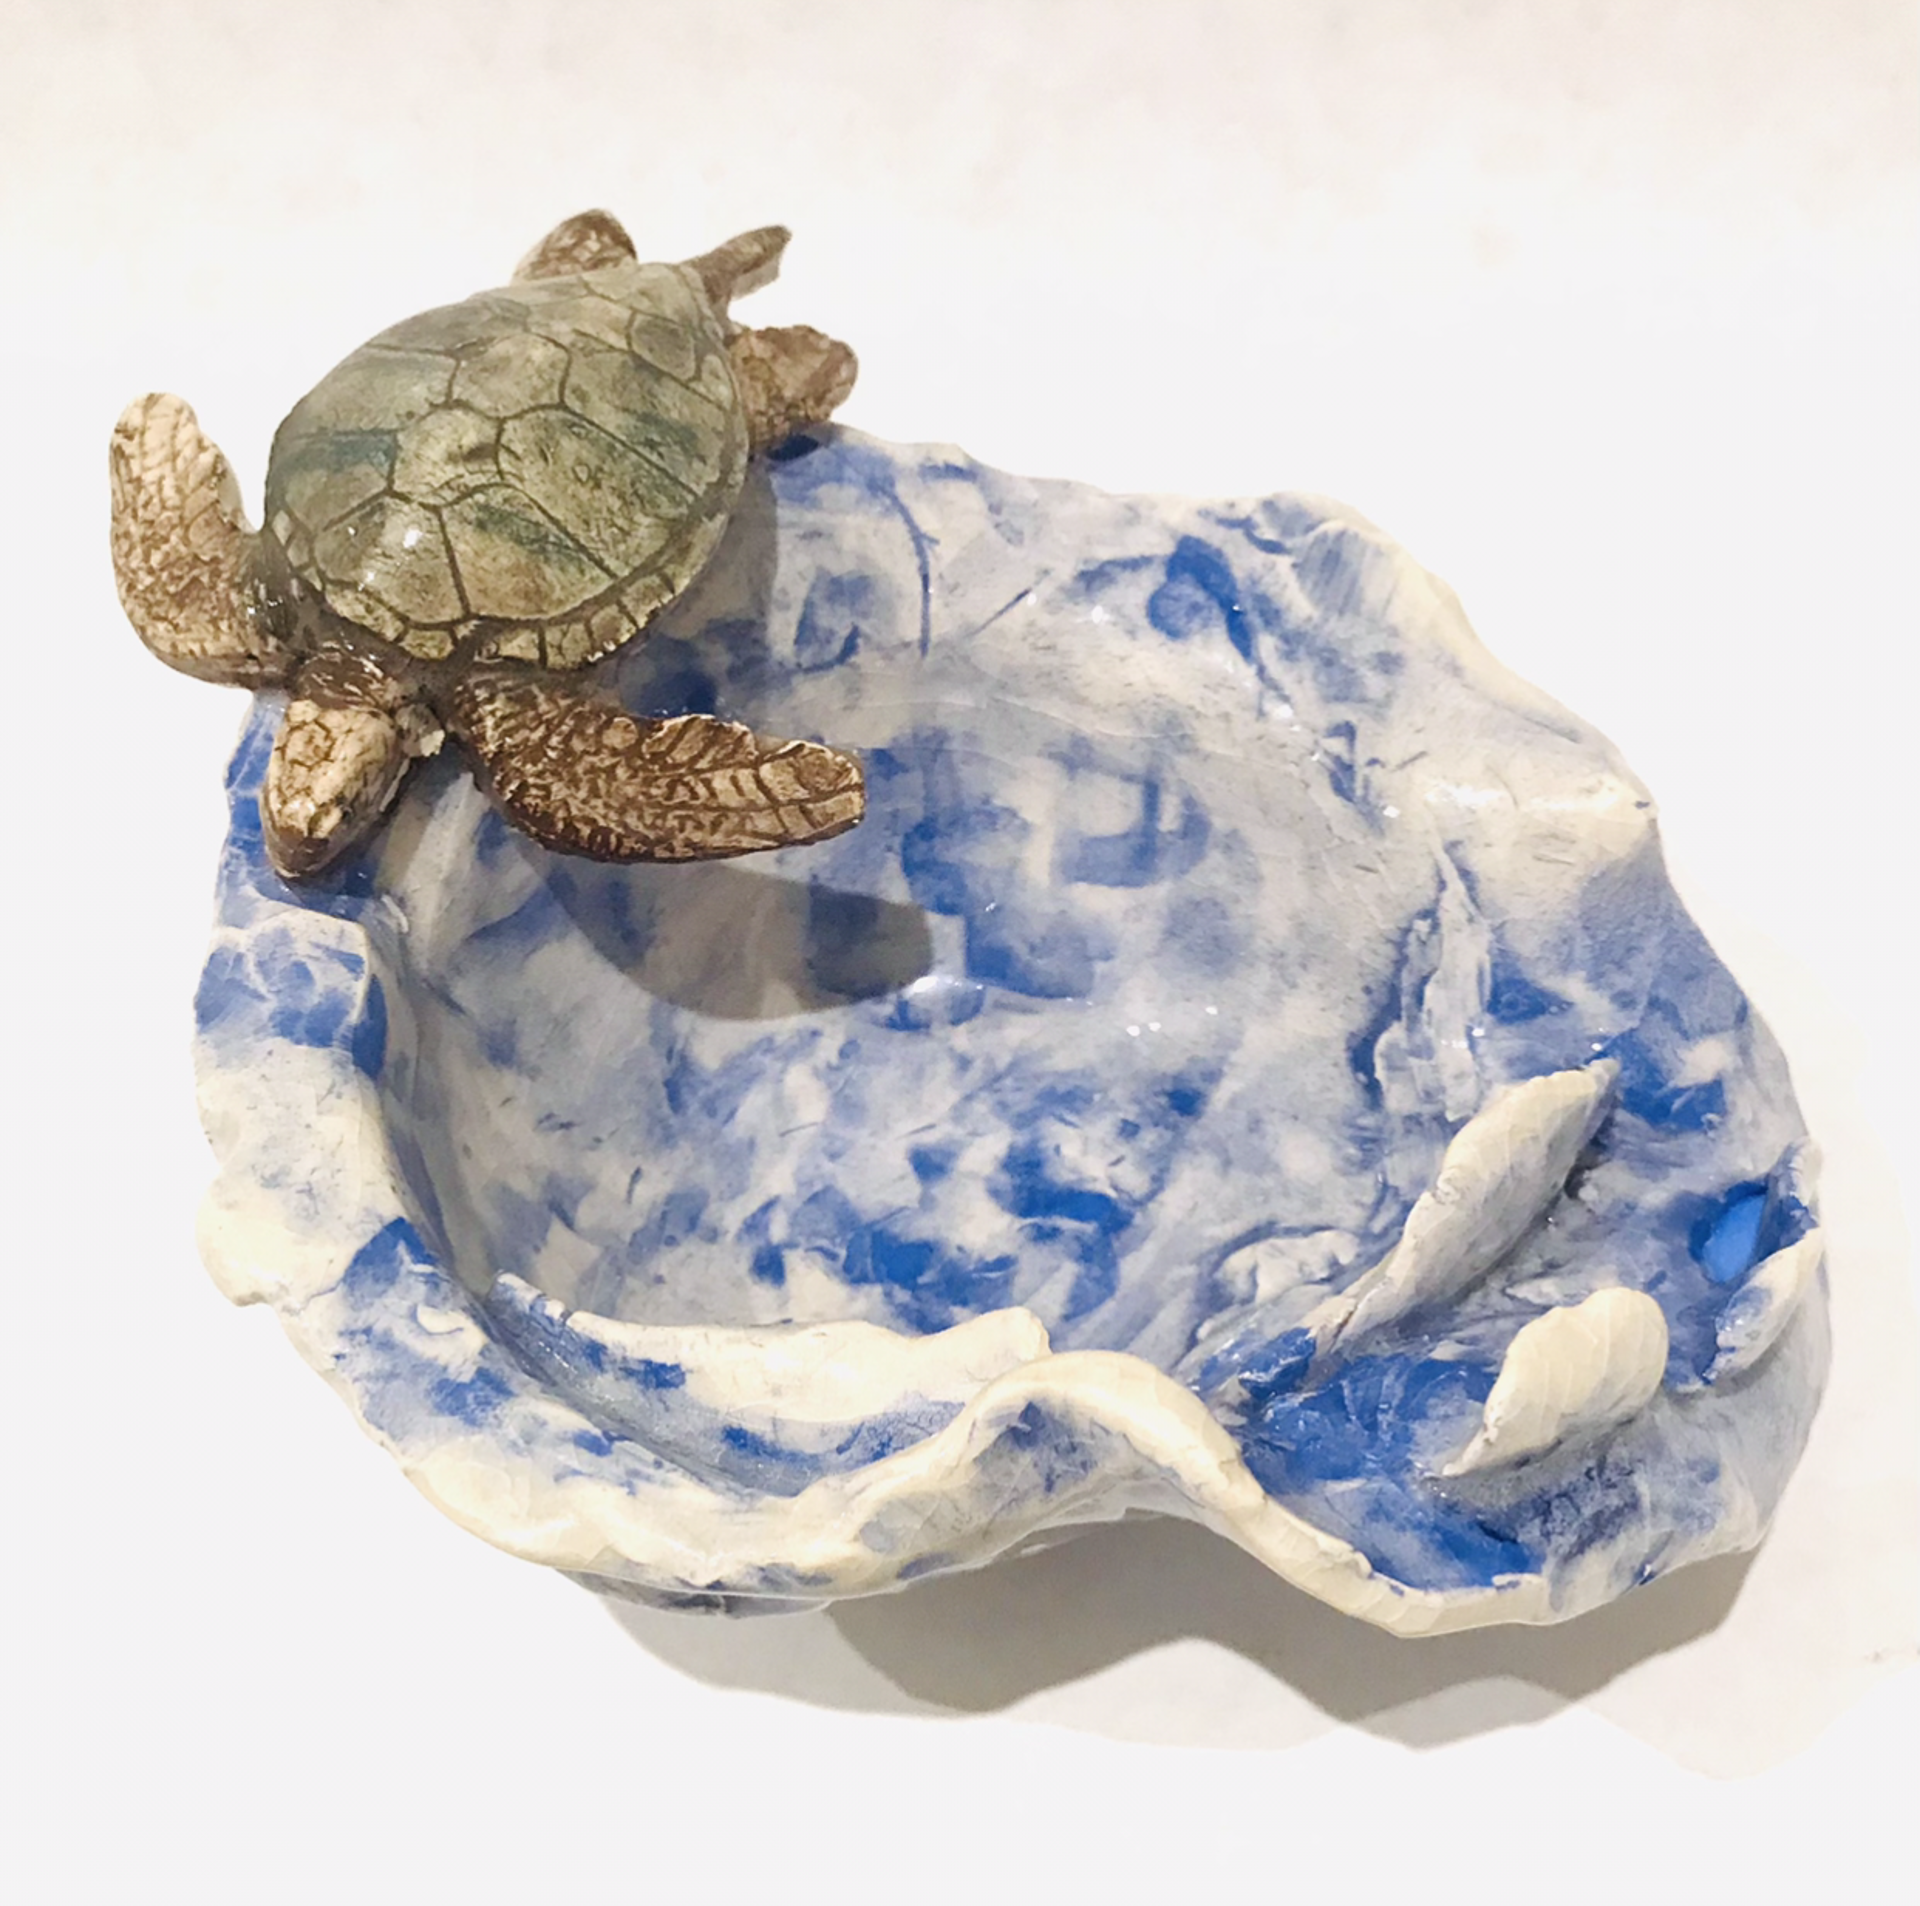 BB22- 51 Turtle Riding a Wave Bowl by Barbara Bergwerf, ceramics